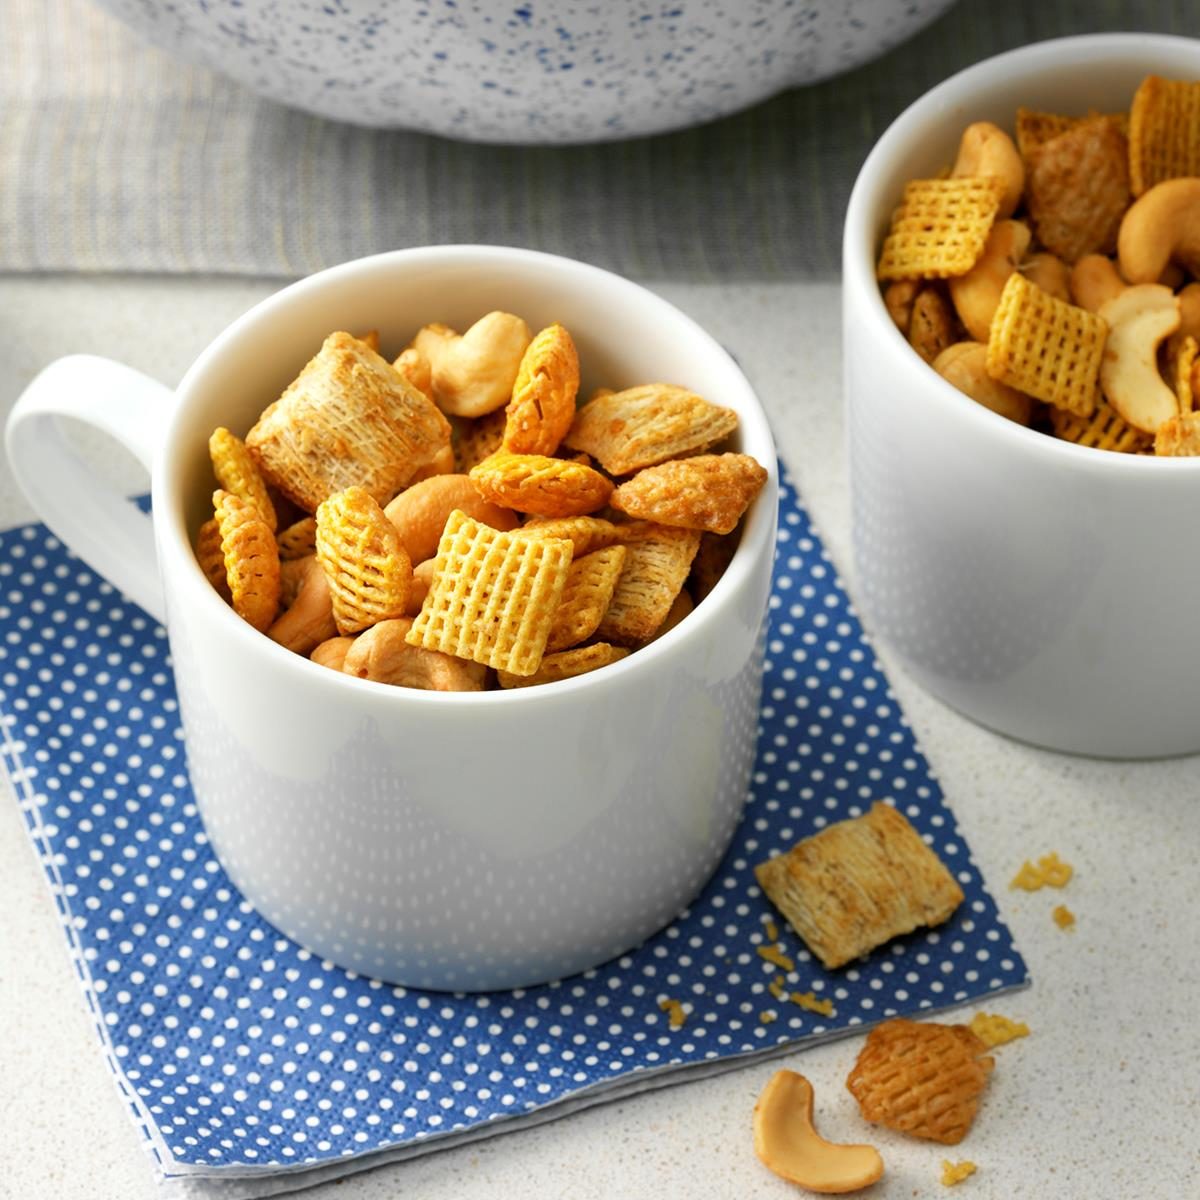 Which Generic Cereals Actually Taste Better? - Thrillist